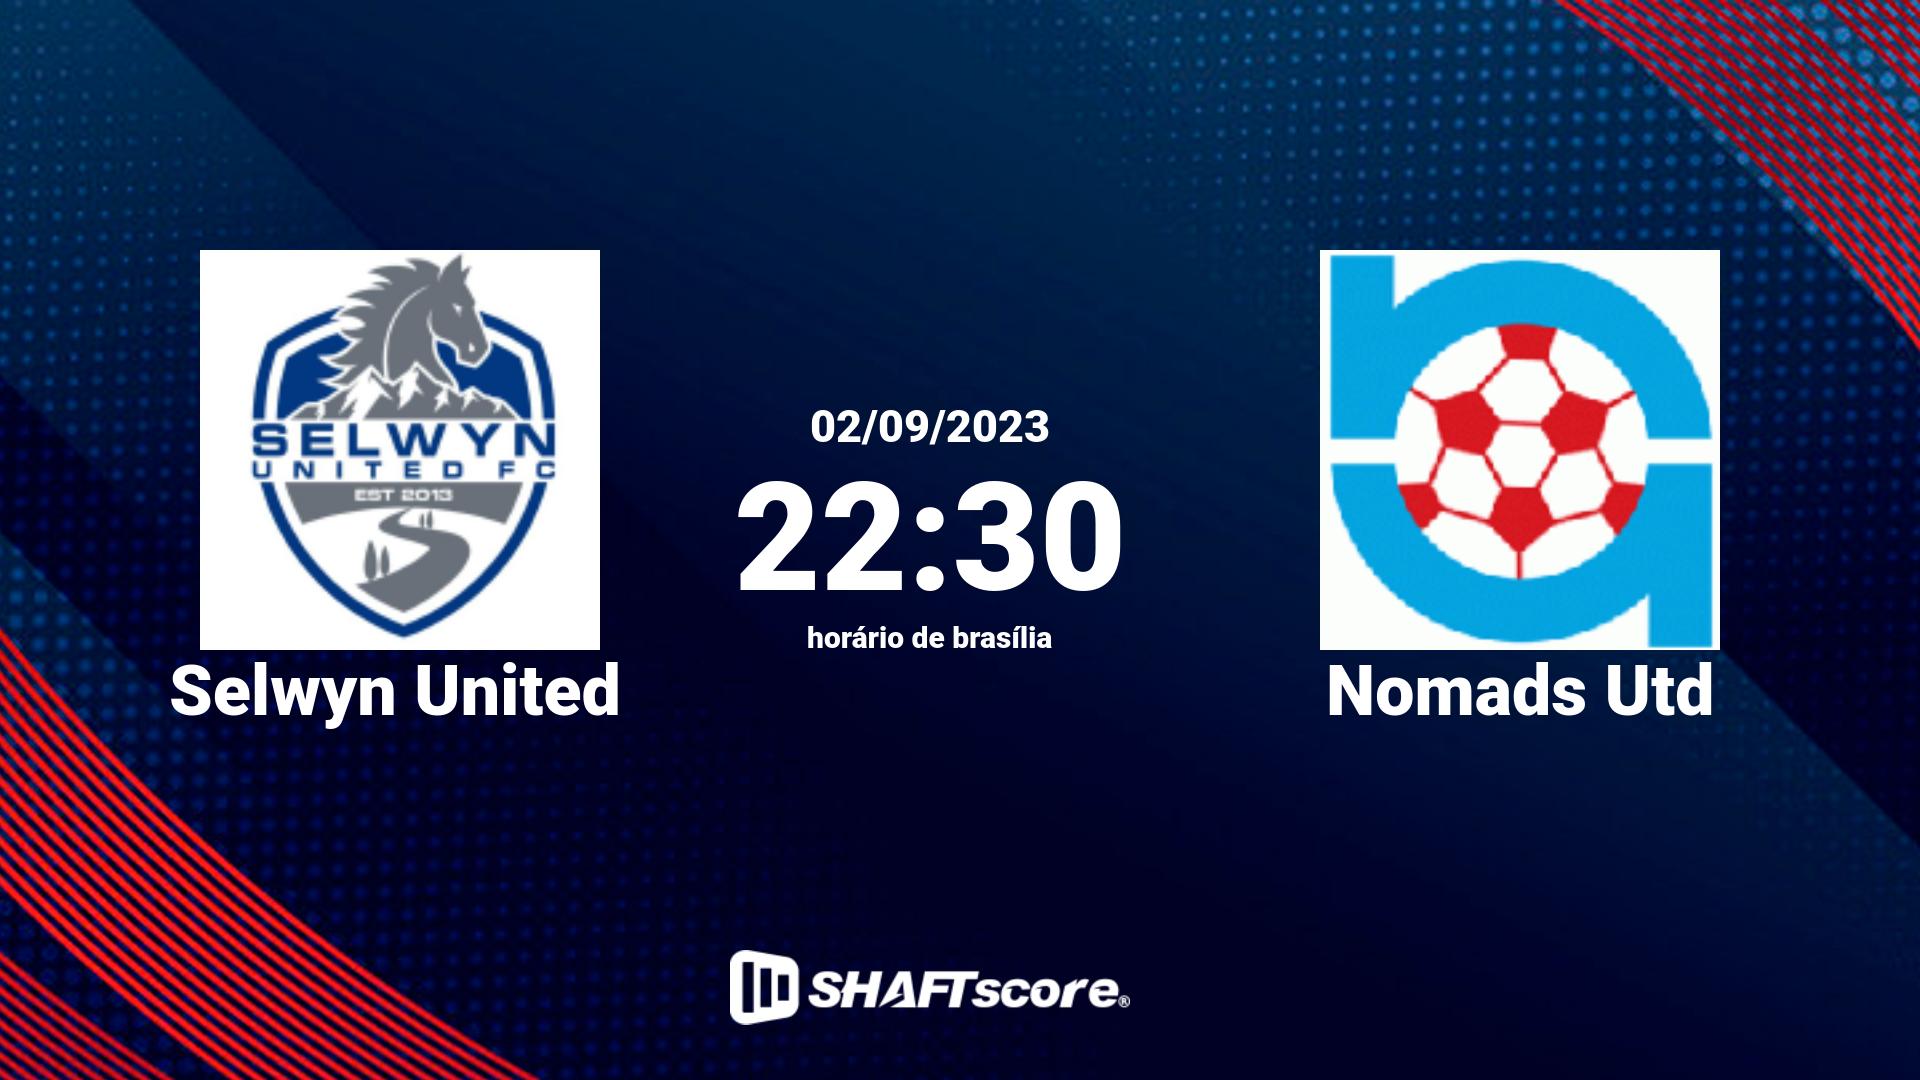 Estatísticas do jogo Selwyn United vs Nomads Utd 02.09 22:30